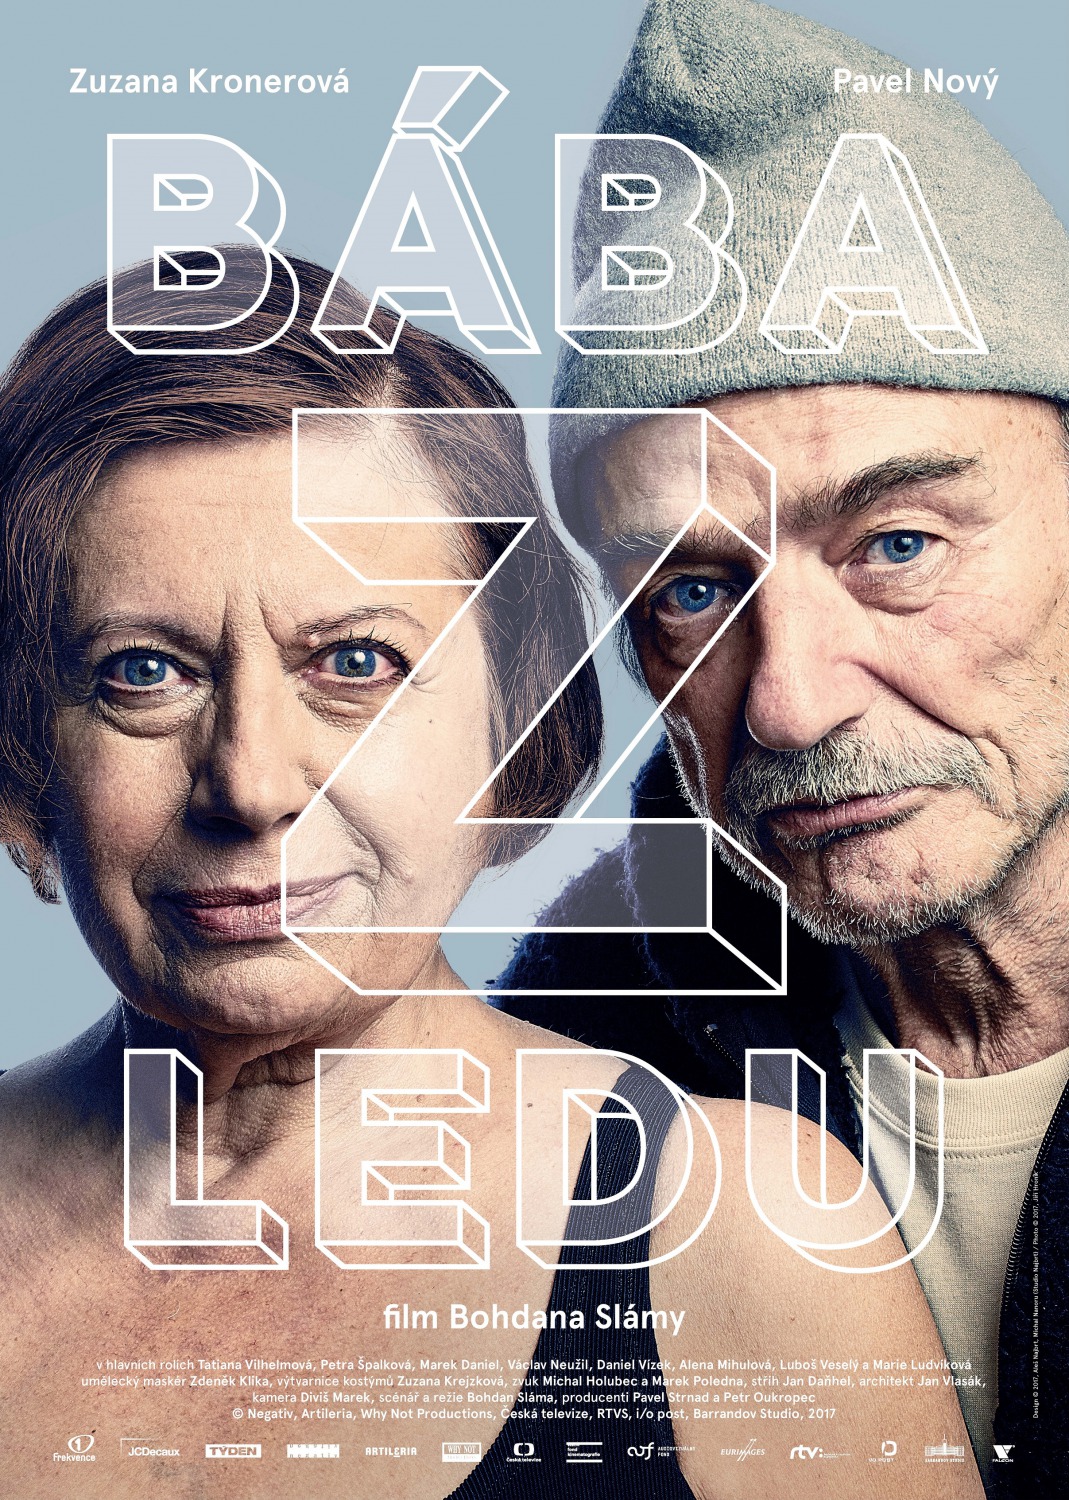 Extra Large Movie Poster Image for Bába z ledu 